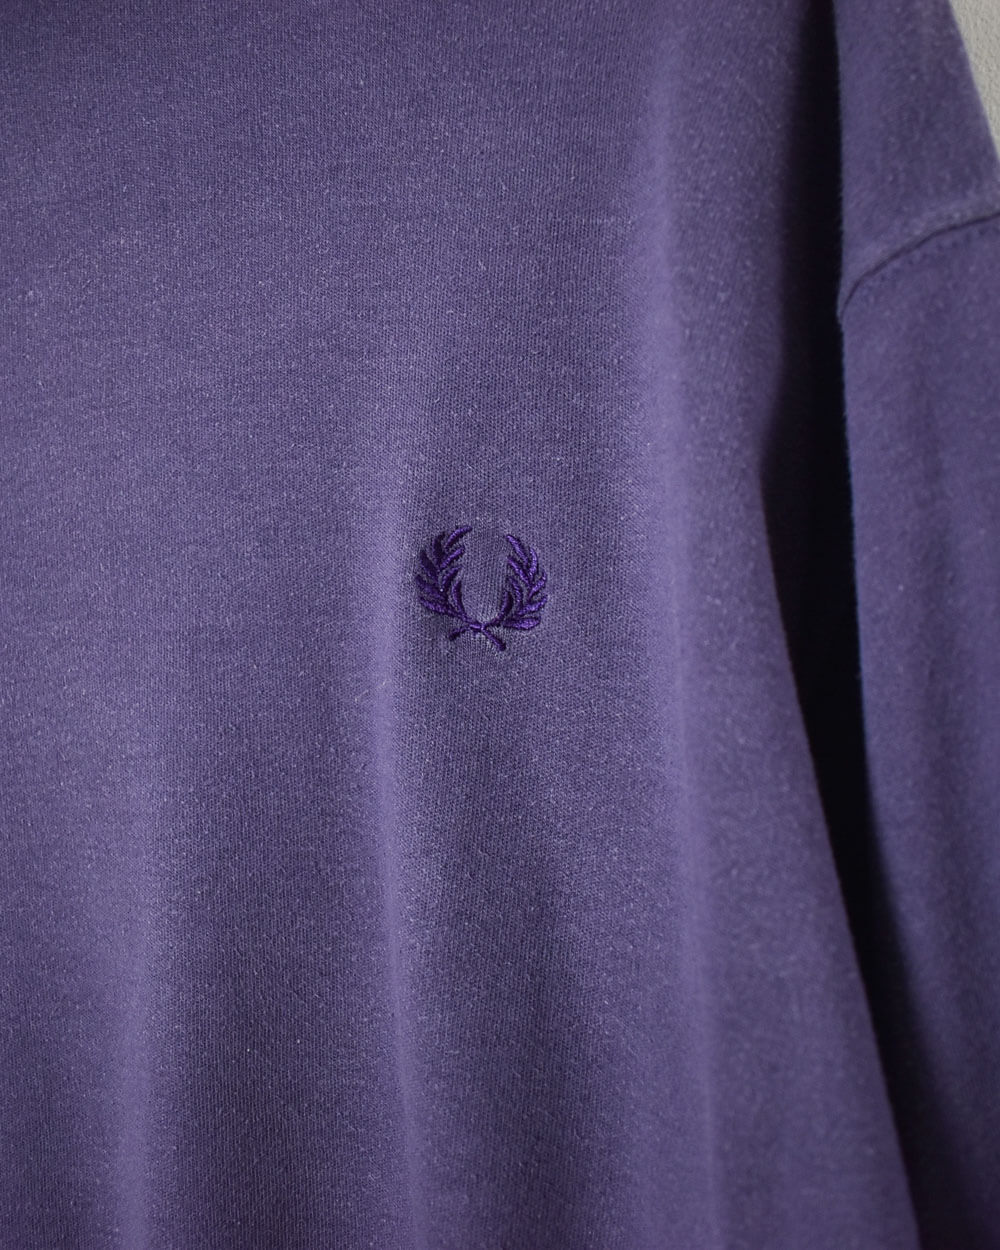 Purple Fred Perry Turtle Neck Sweatshirt - Large